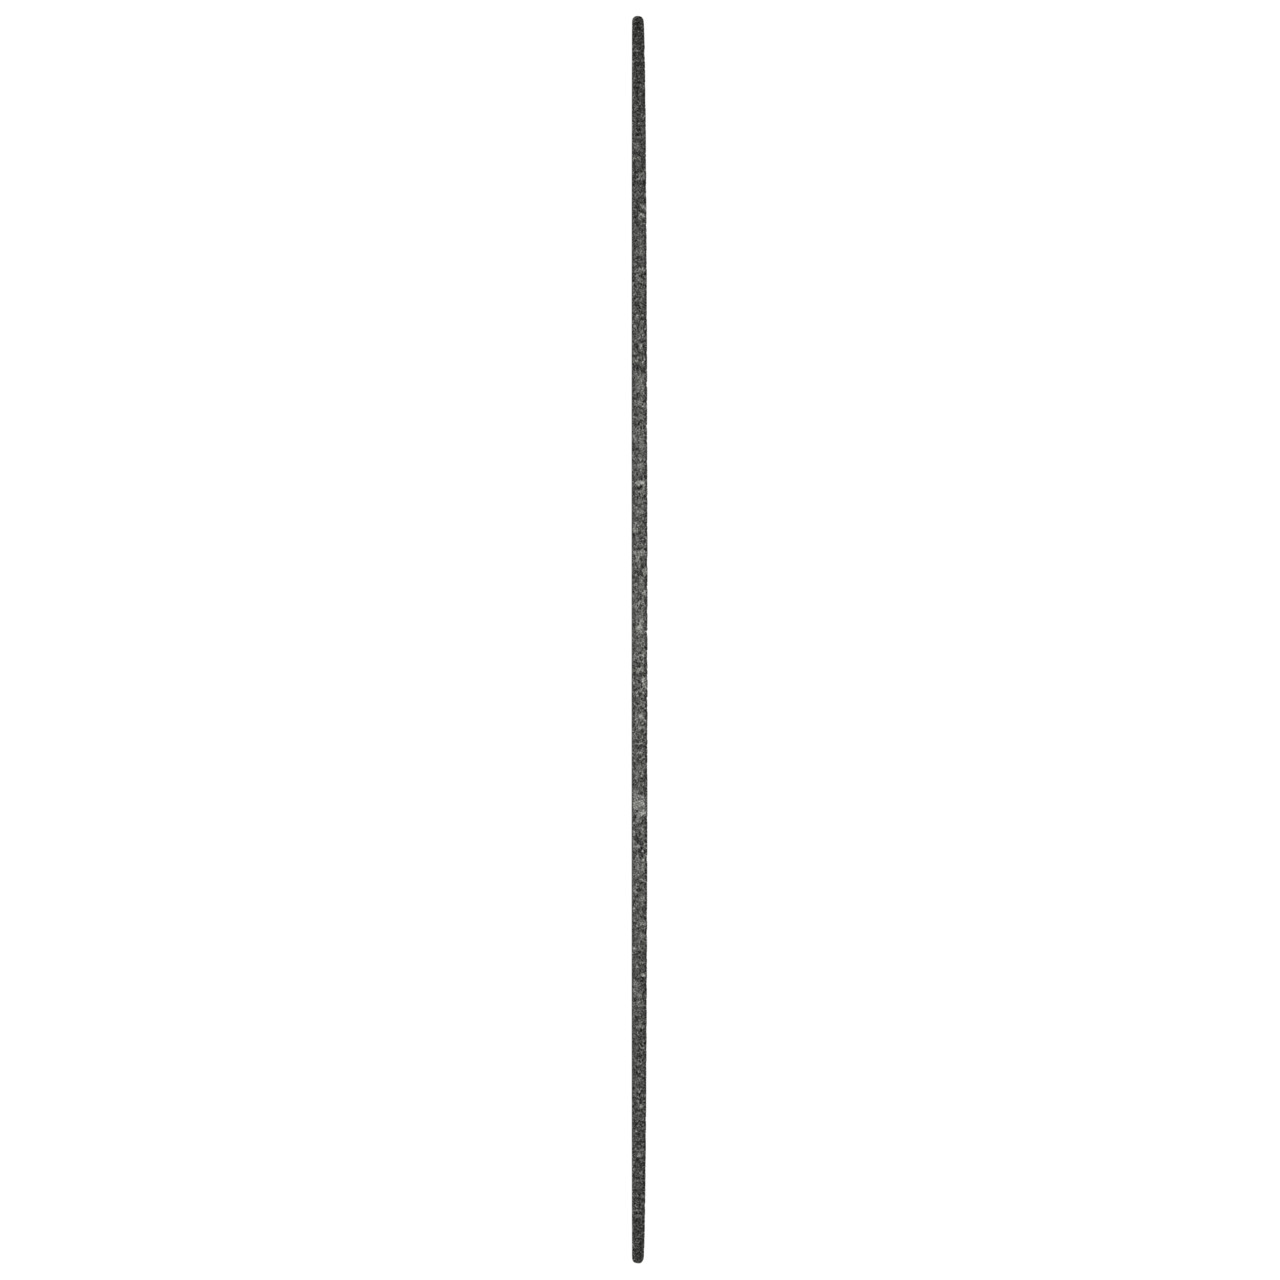 Dischi da taglio Tyrolit DxDxH 75x1x10 Per acciaio, forma: 41 - versione diritta, Art. 325212